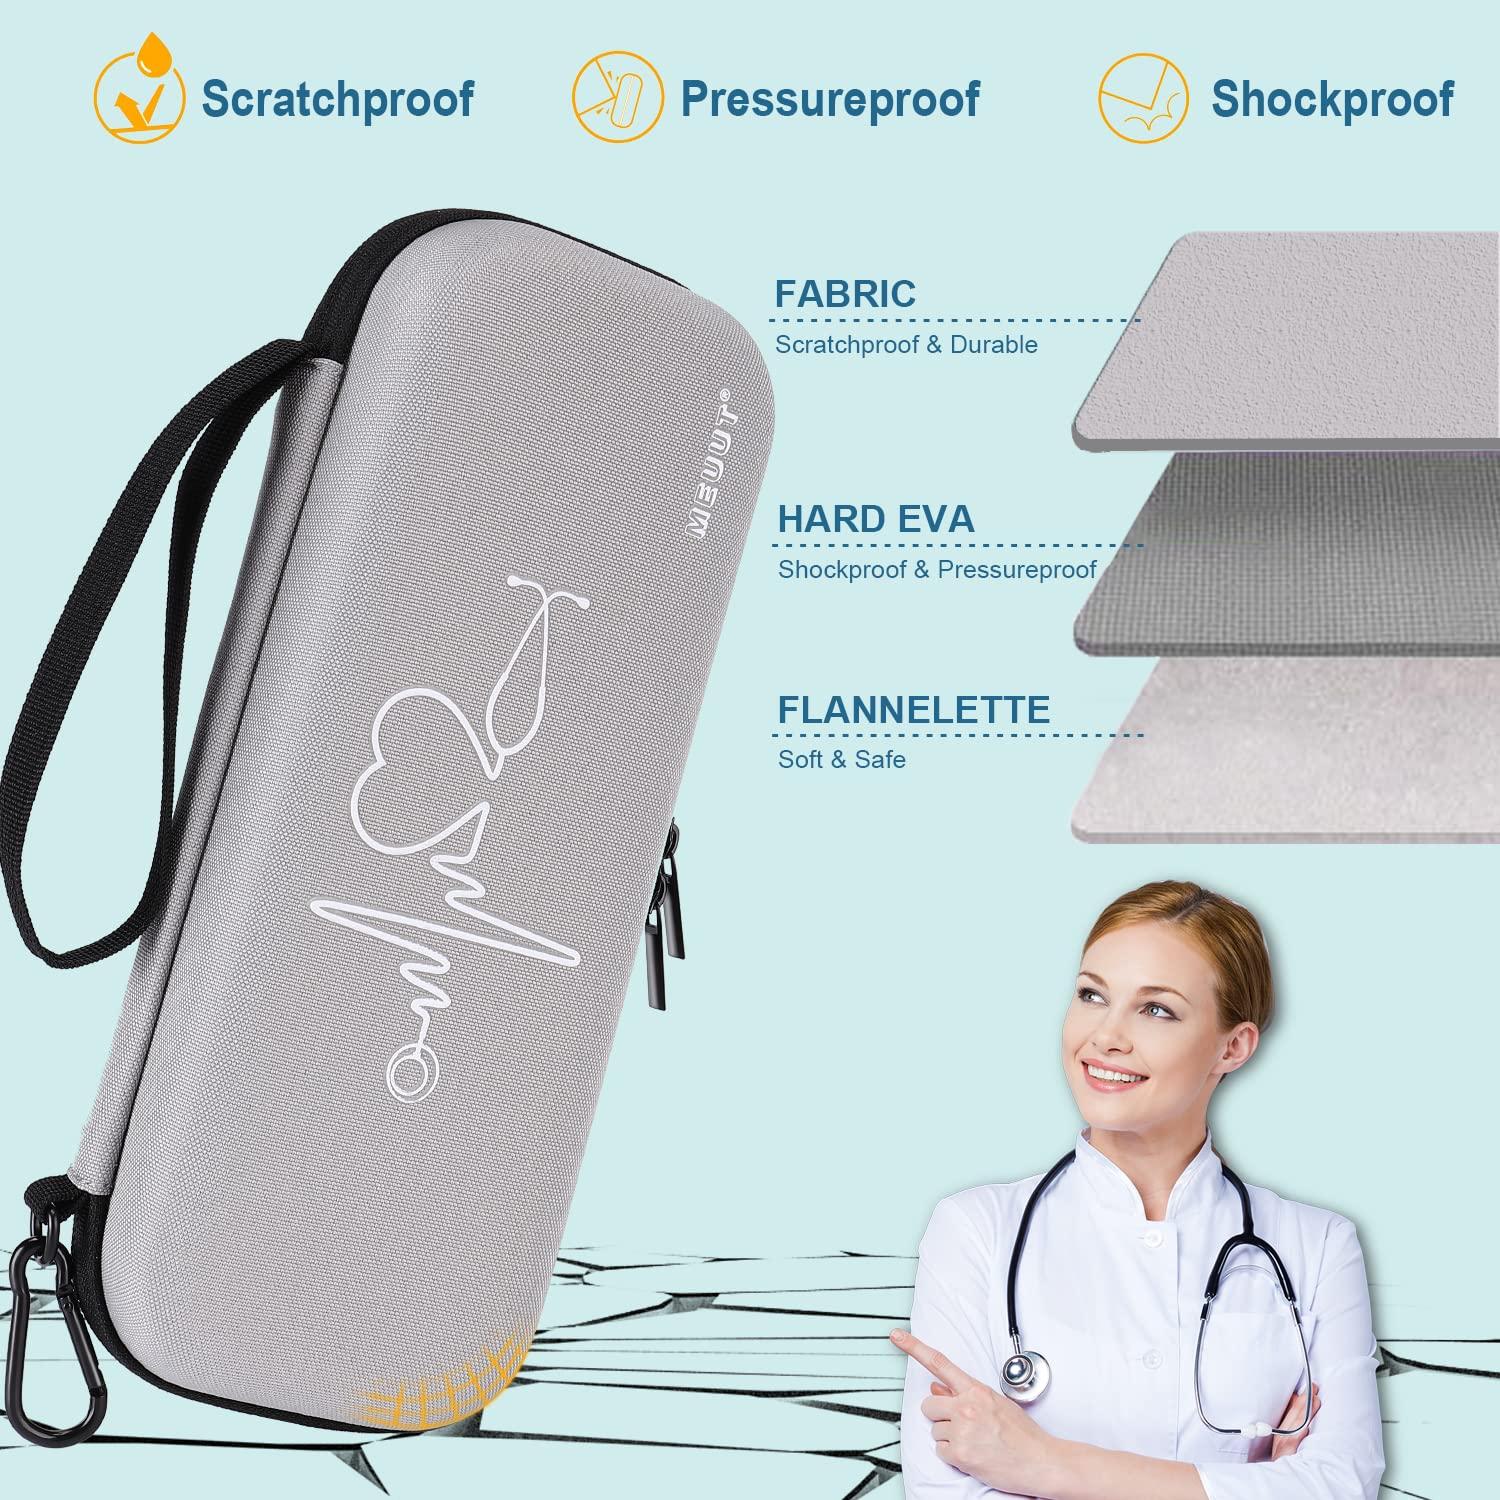 Personalized Nurse Pouch, Nurse Kit, Nurse Gift 